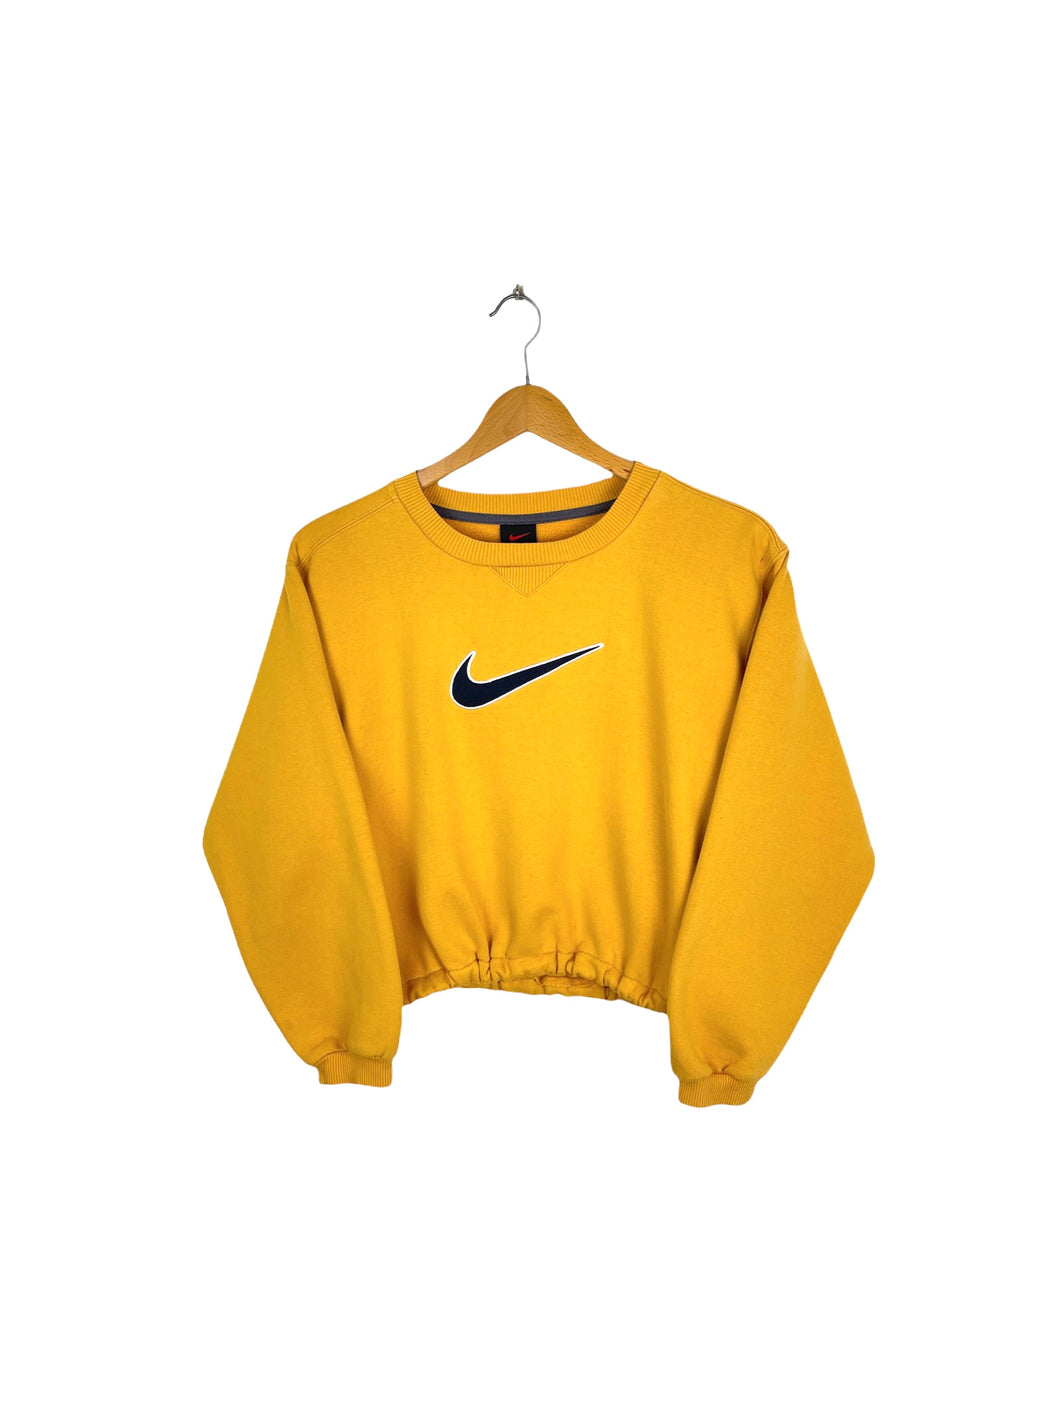 Nike Cropped Sweatshirt - XSmall